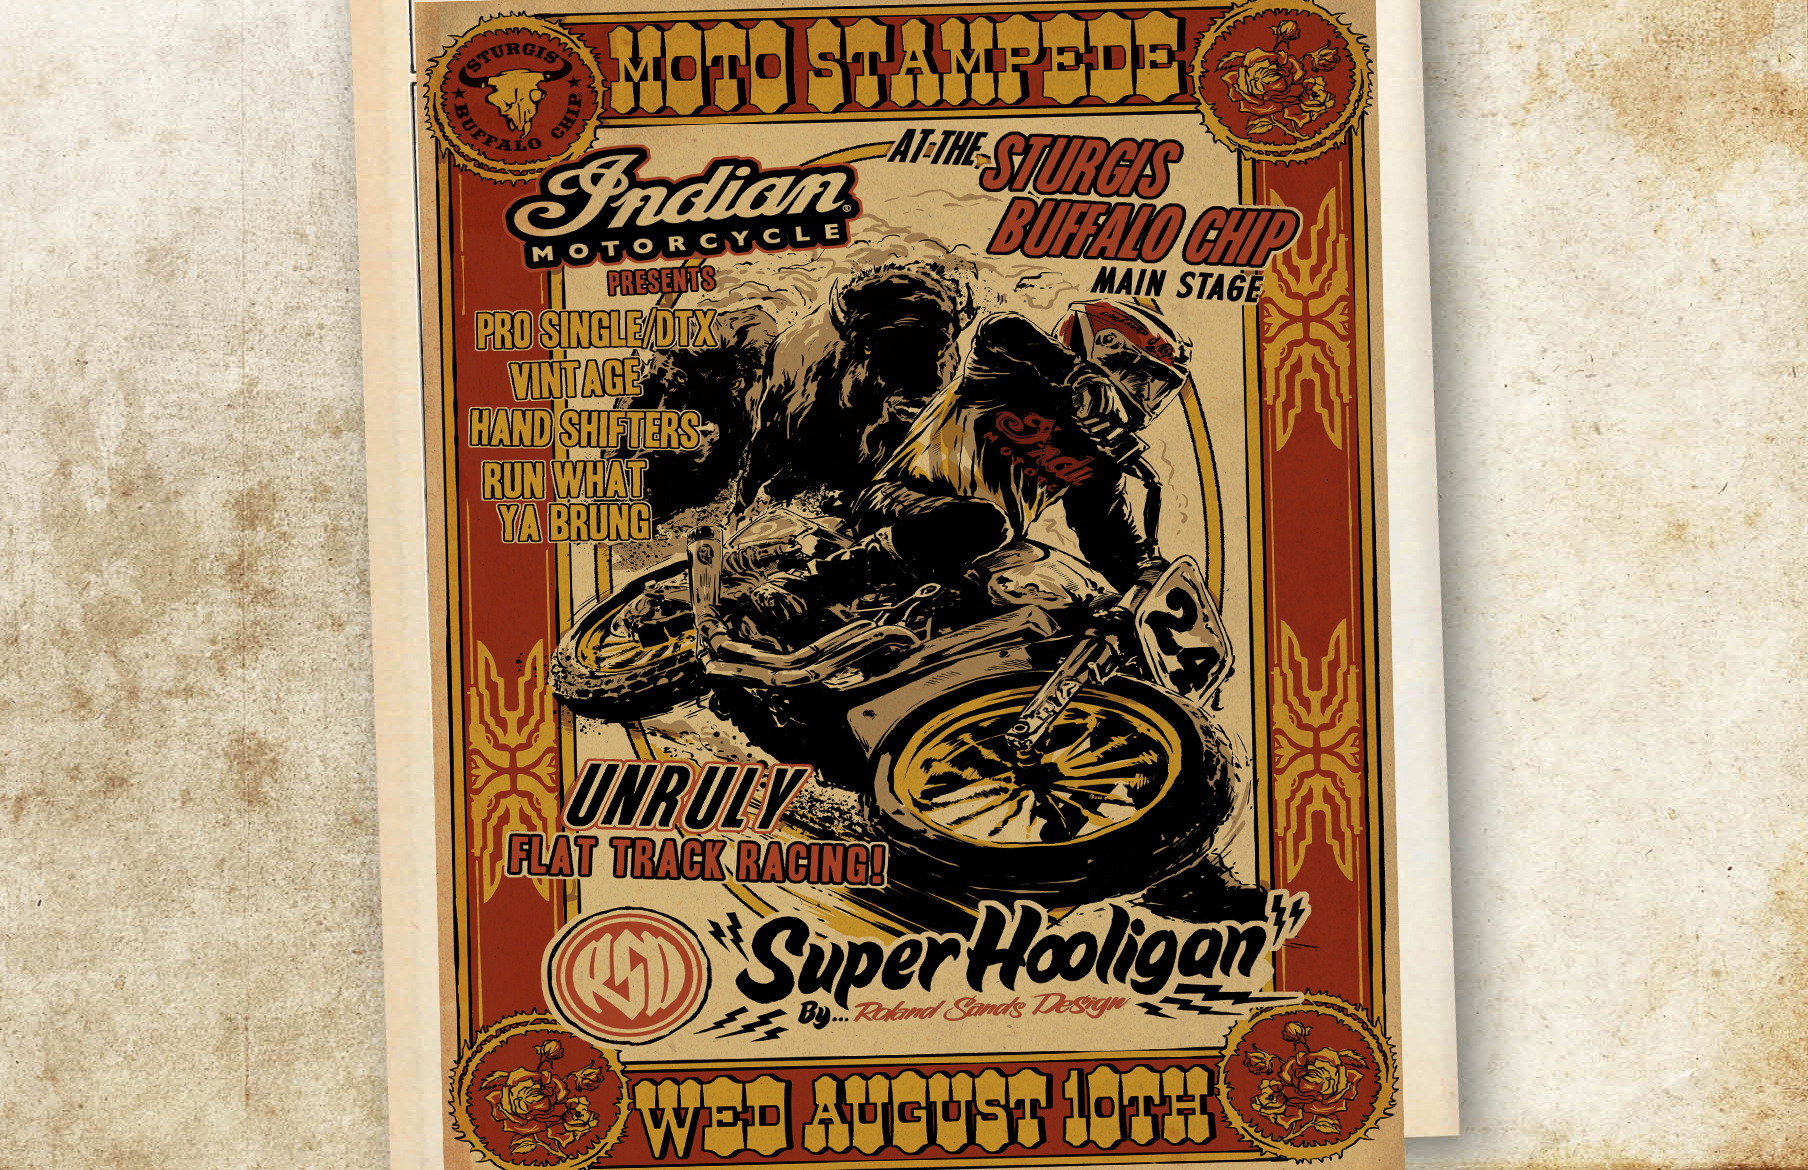 Buffalo Chip Garage - Sturgis Motorcycle Parts, Service